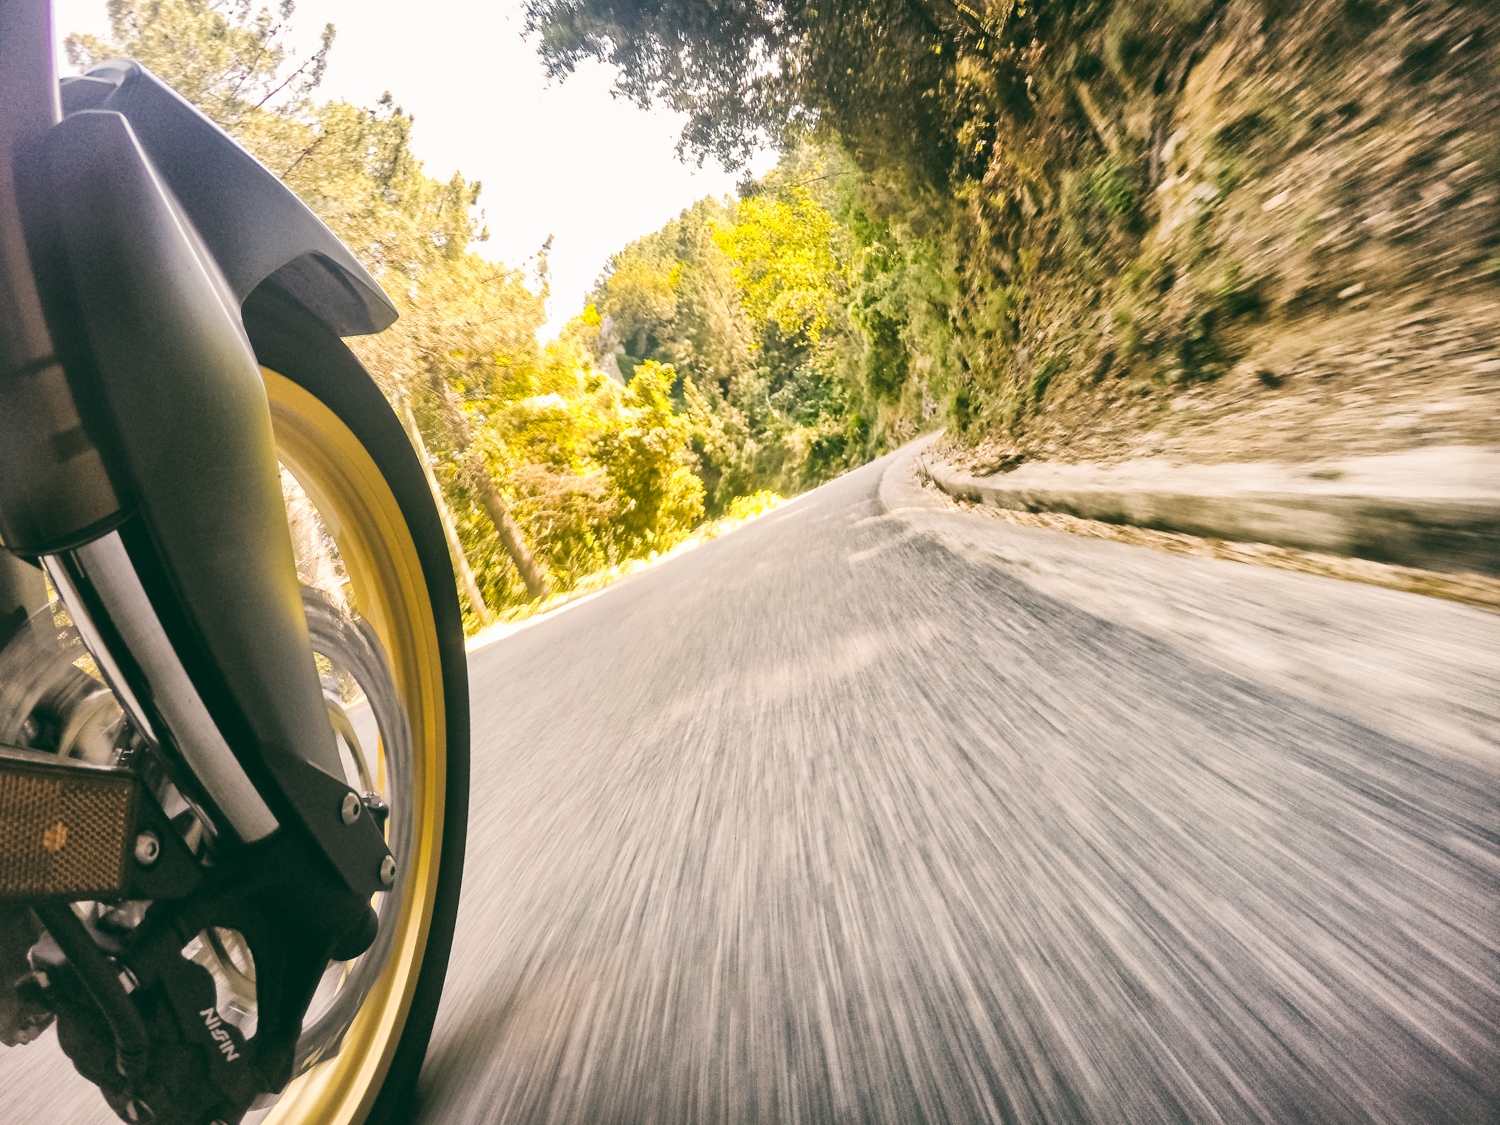 Motorrad-Tour in Korsika im Juni 2019